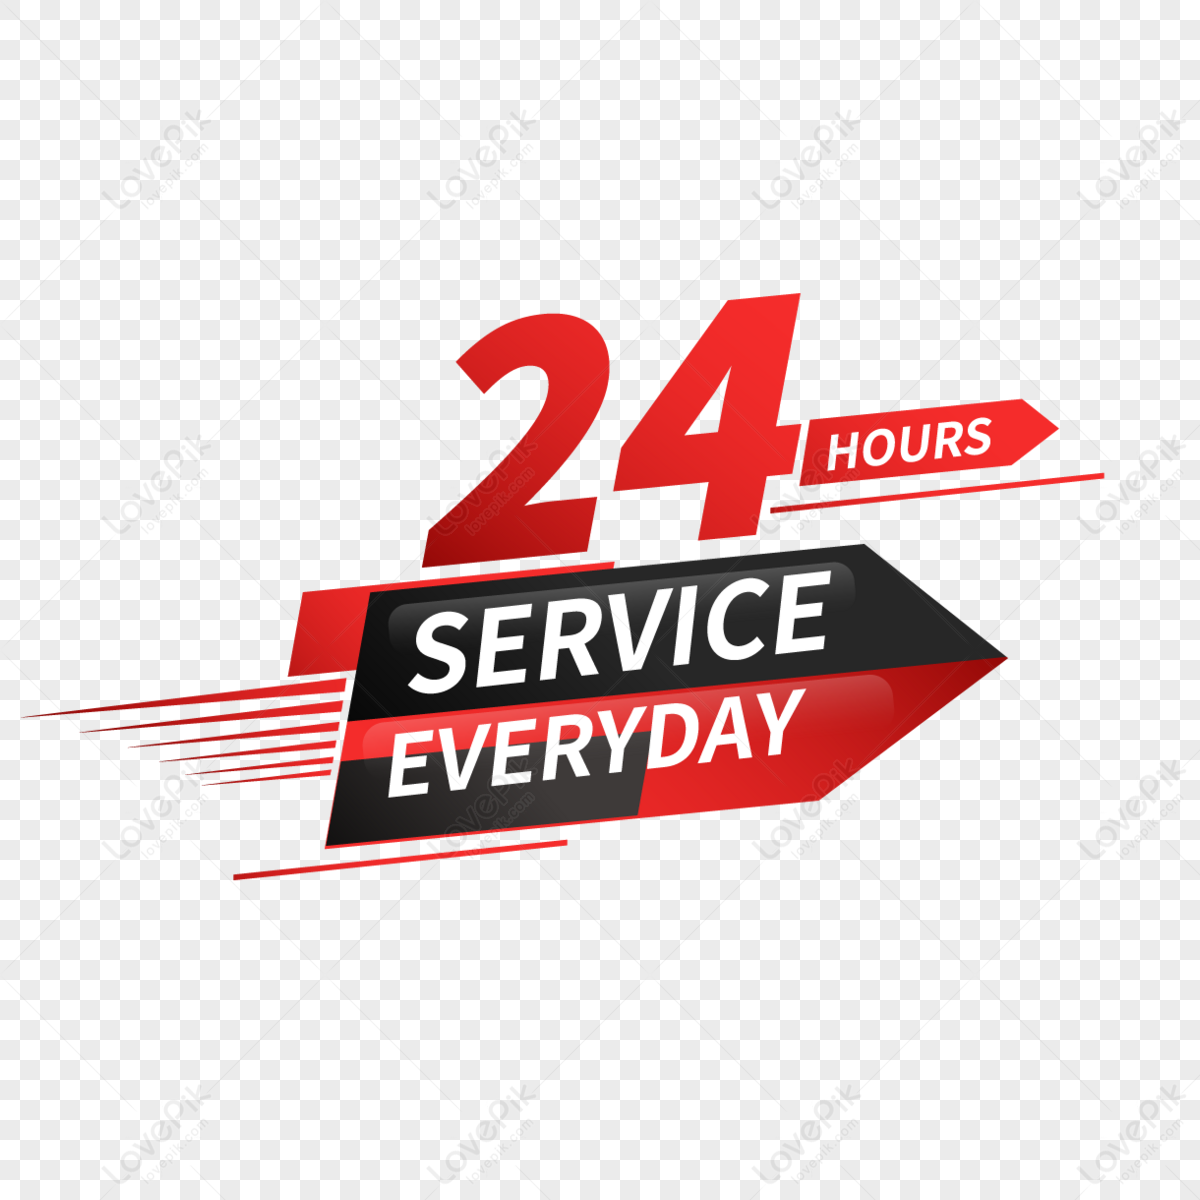 24/7 Everyday Service Vector